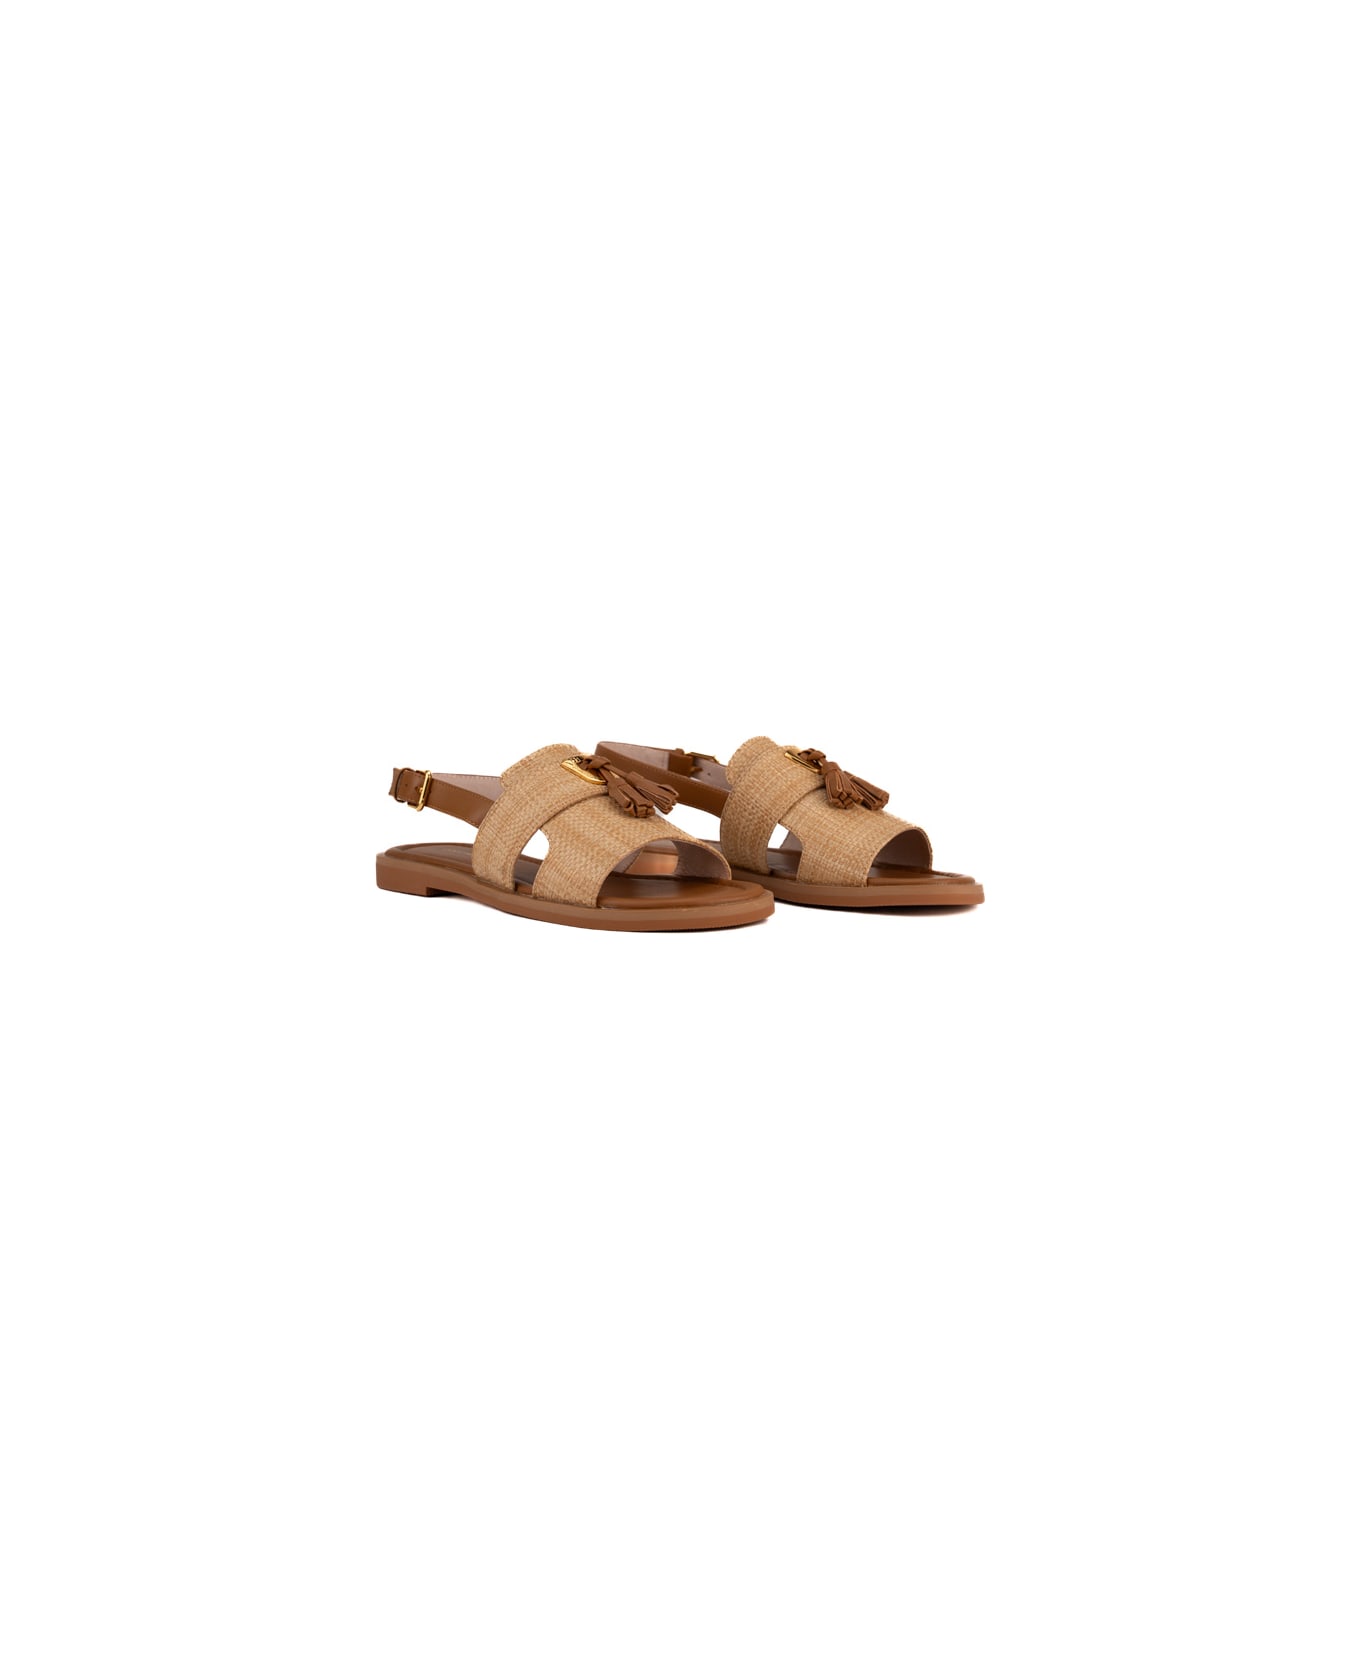 Coccinelle Raffia Sandal With Brown Tassels - Natural/cuir サンダル